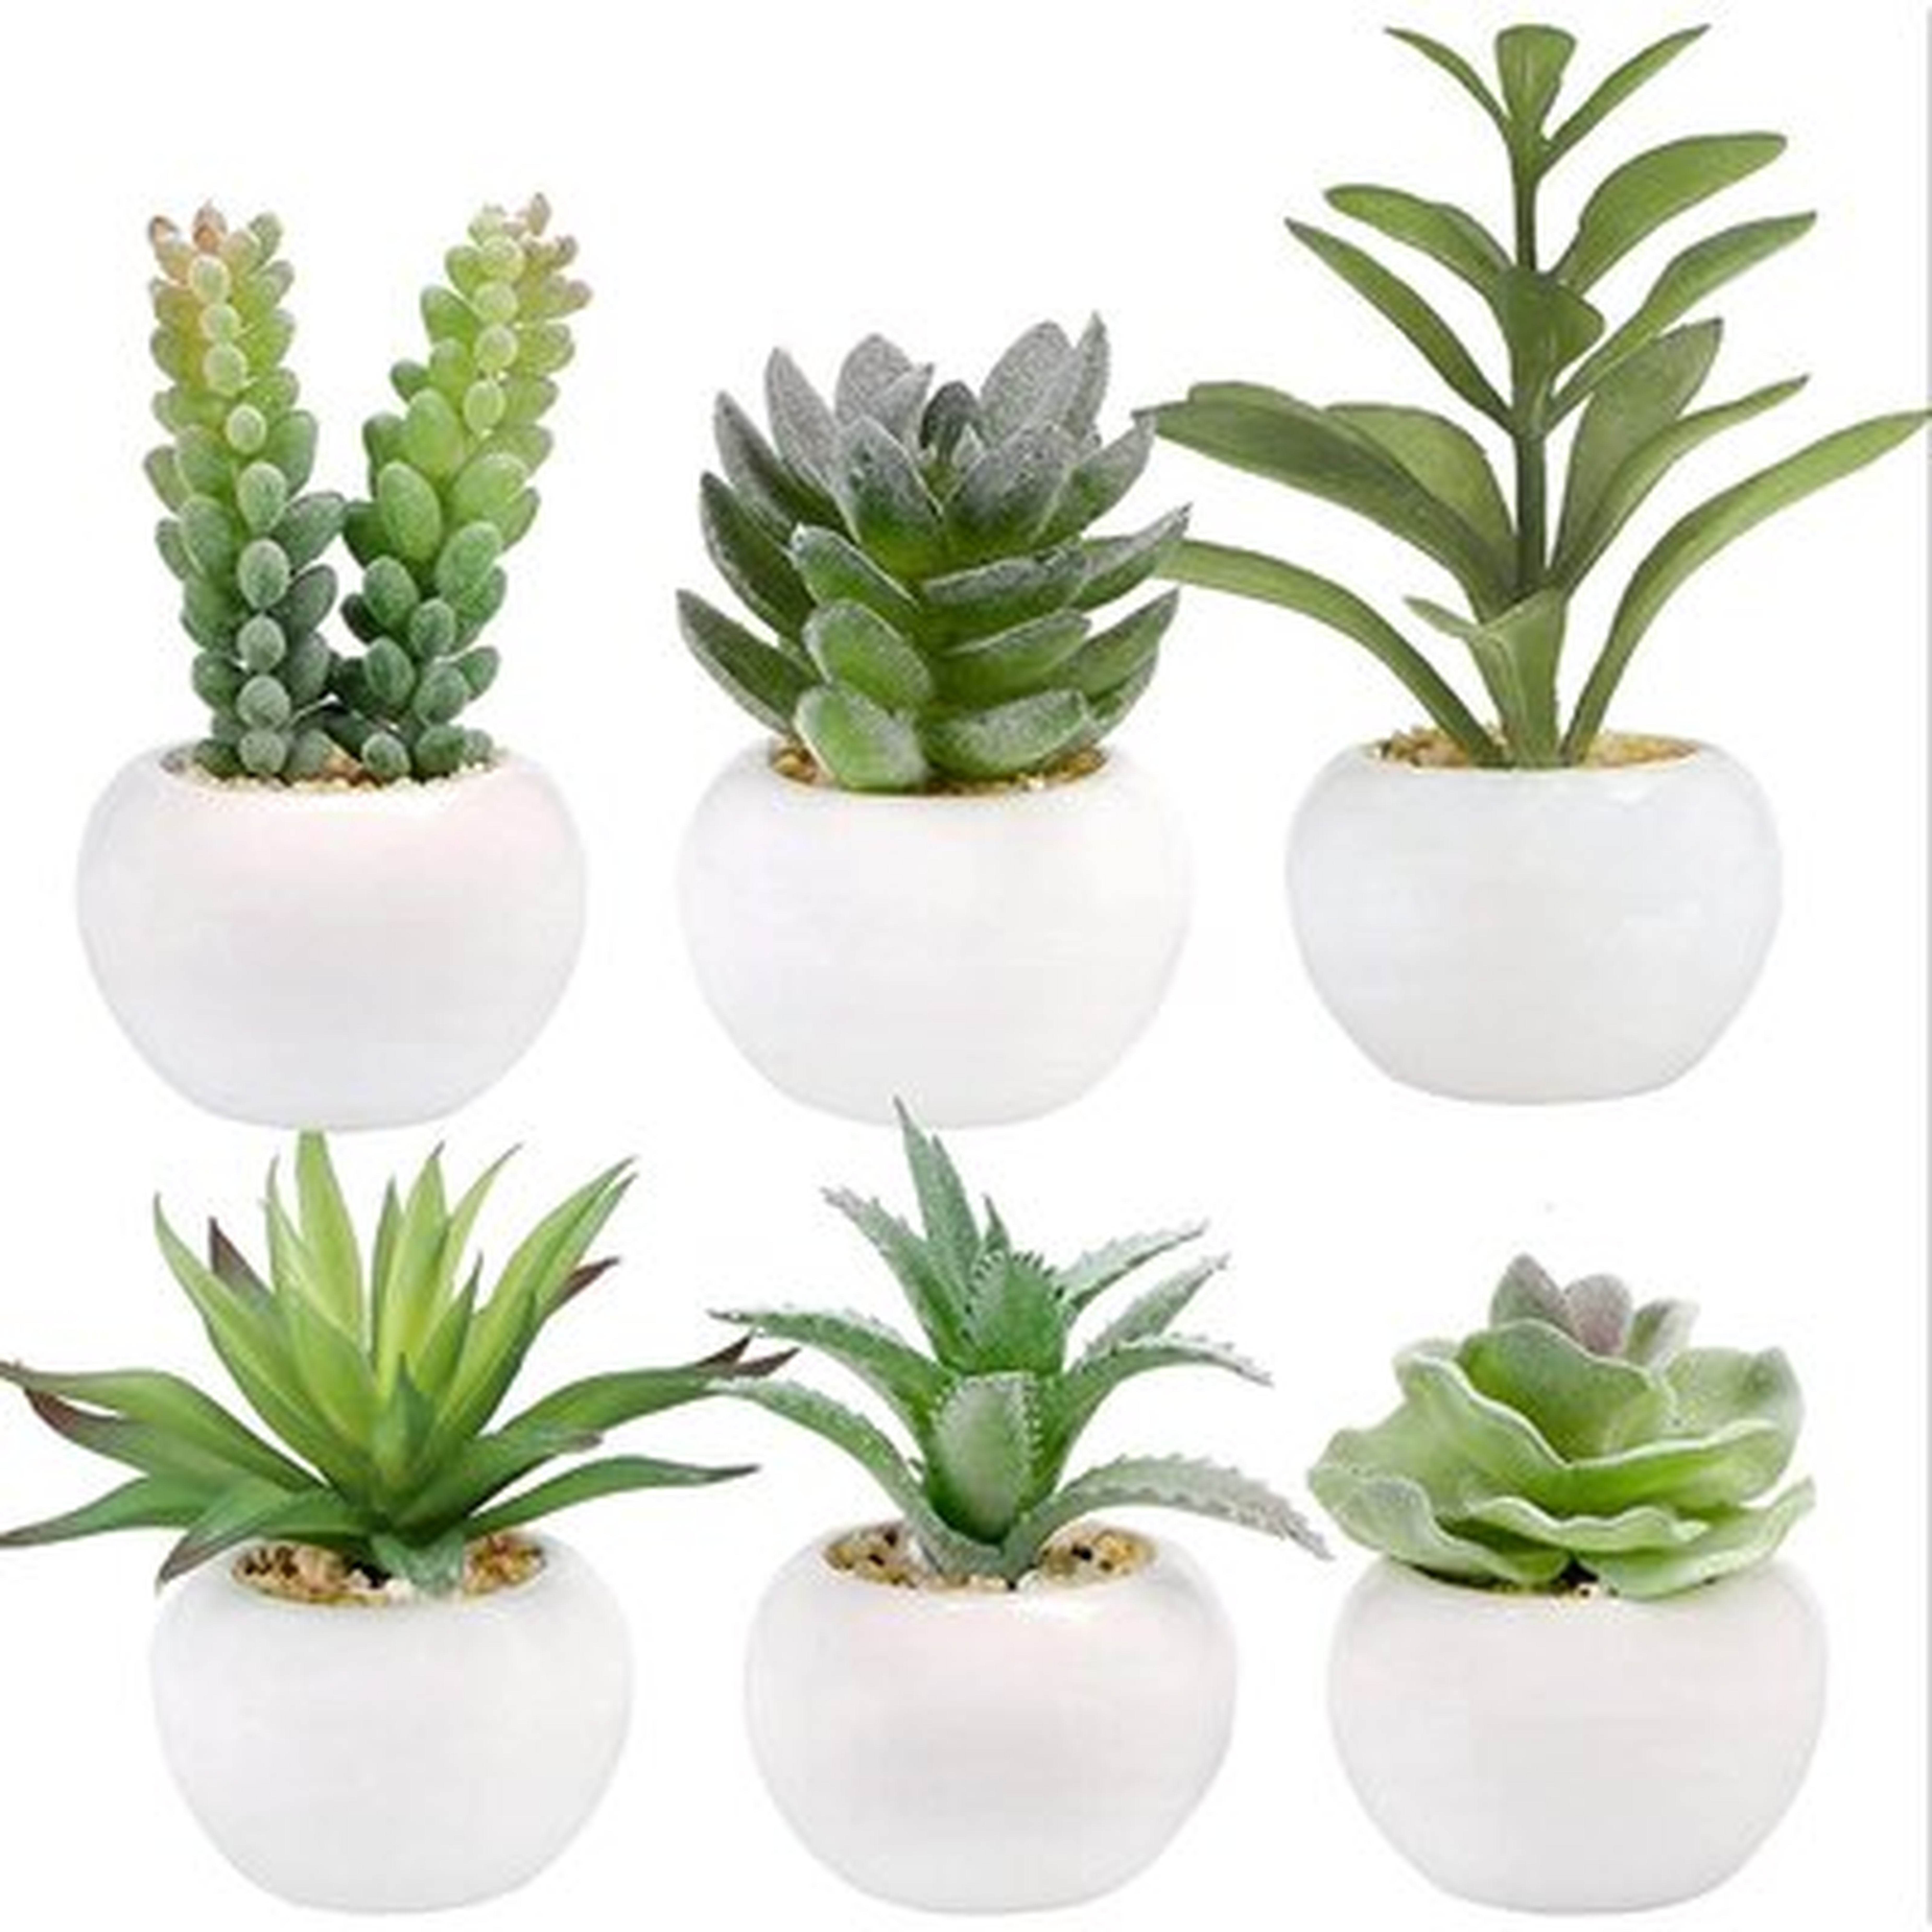 Set Of 6 Succulents Plants Artificial In Mini White Ceramic Pots,Small Fake Succulents Plants,Faux Indoor Succulent Plants For Windowsills,Bedroom,Desk,Bathroom,Office,Home Decoration - Wayfair